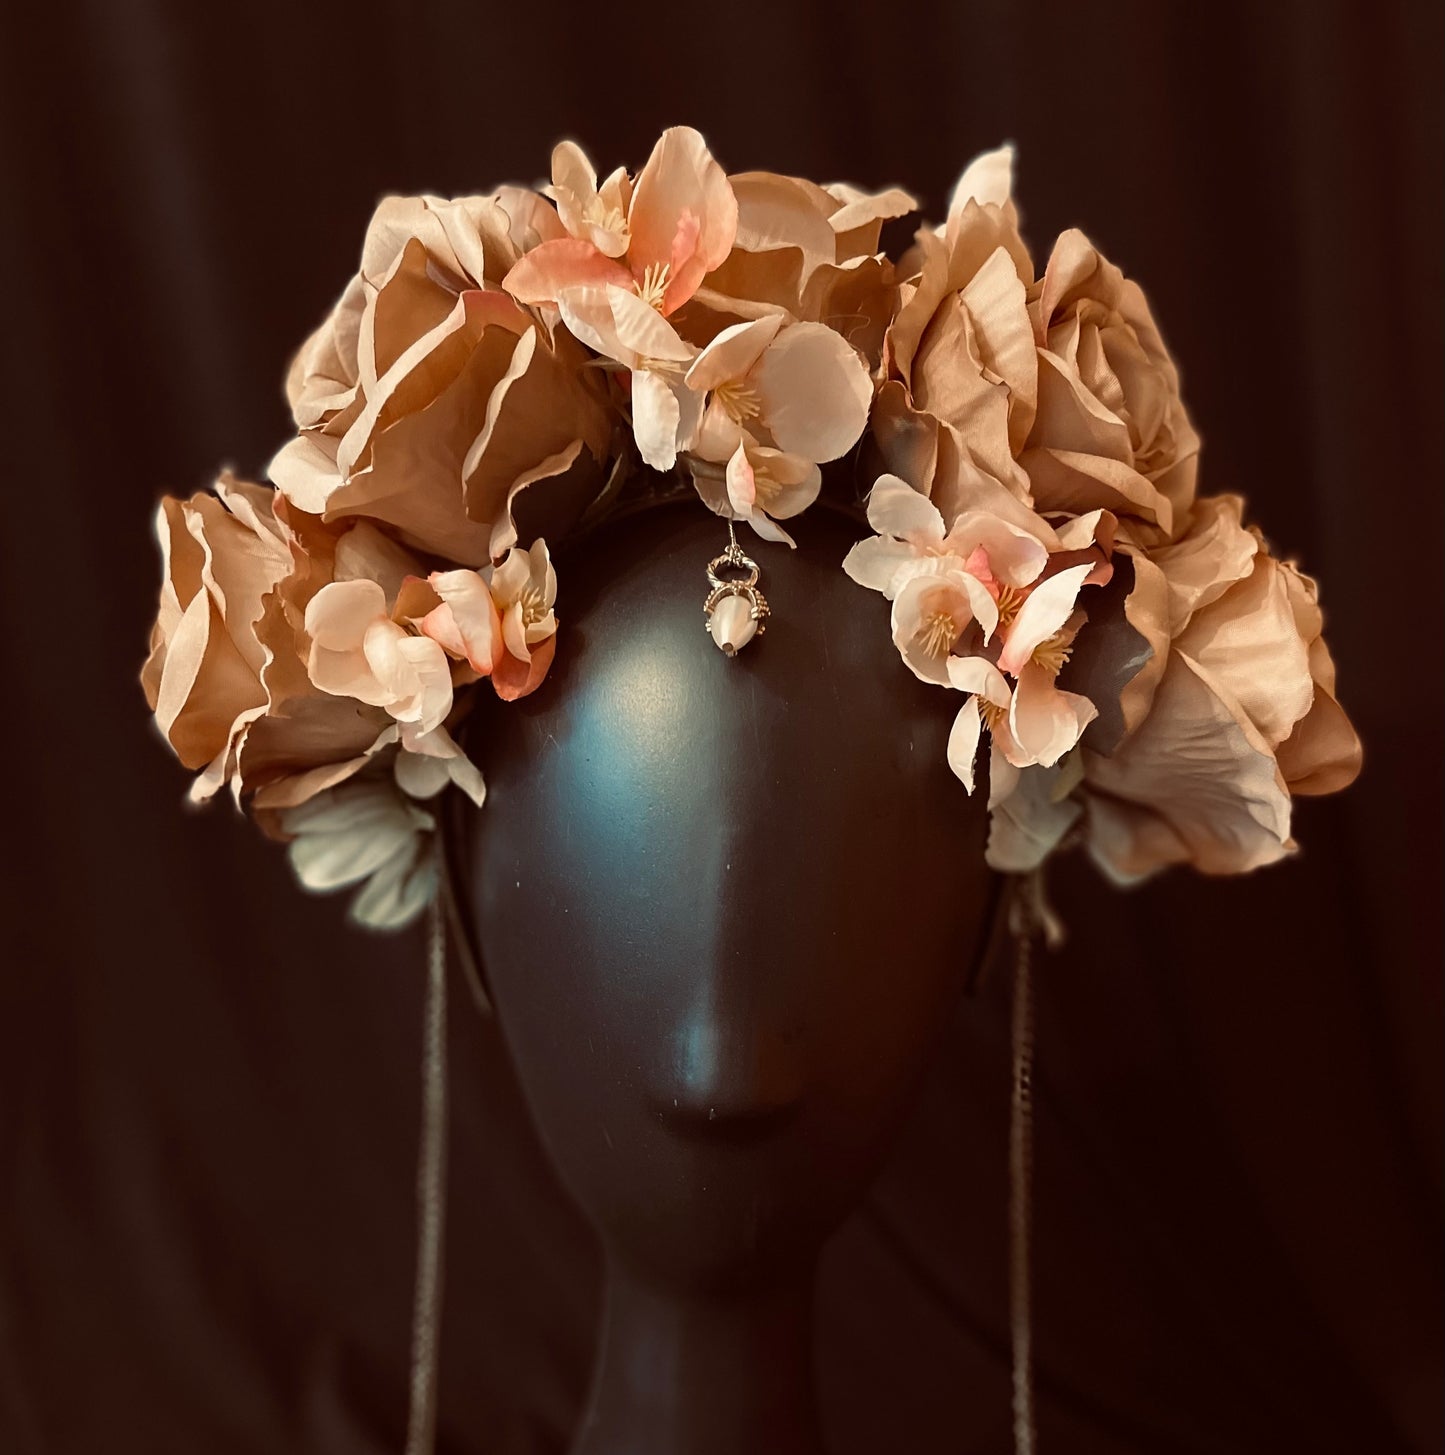 Demeter Flower Crown